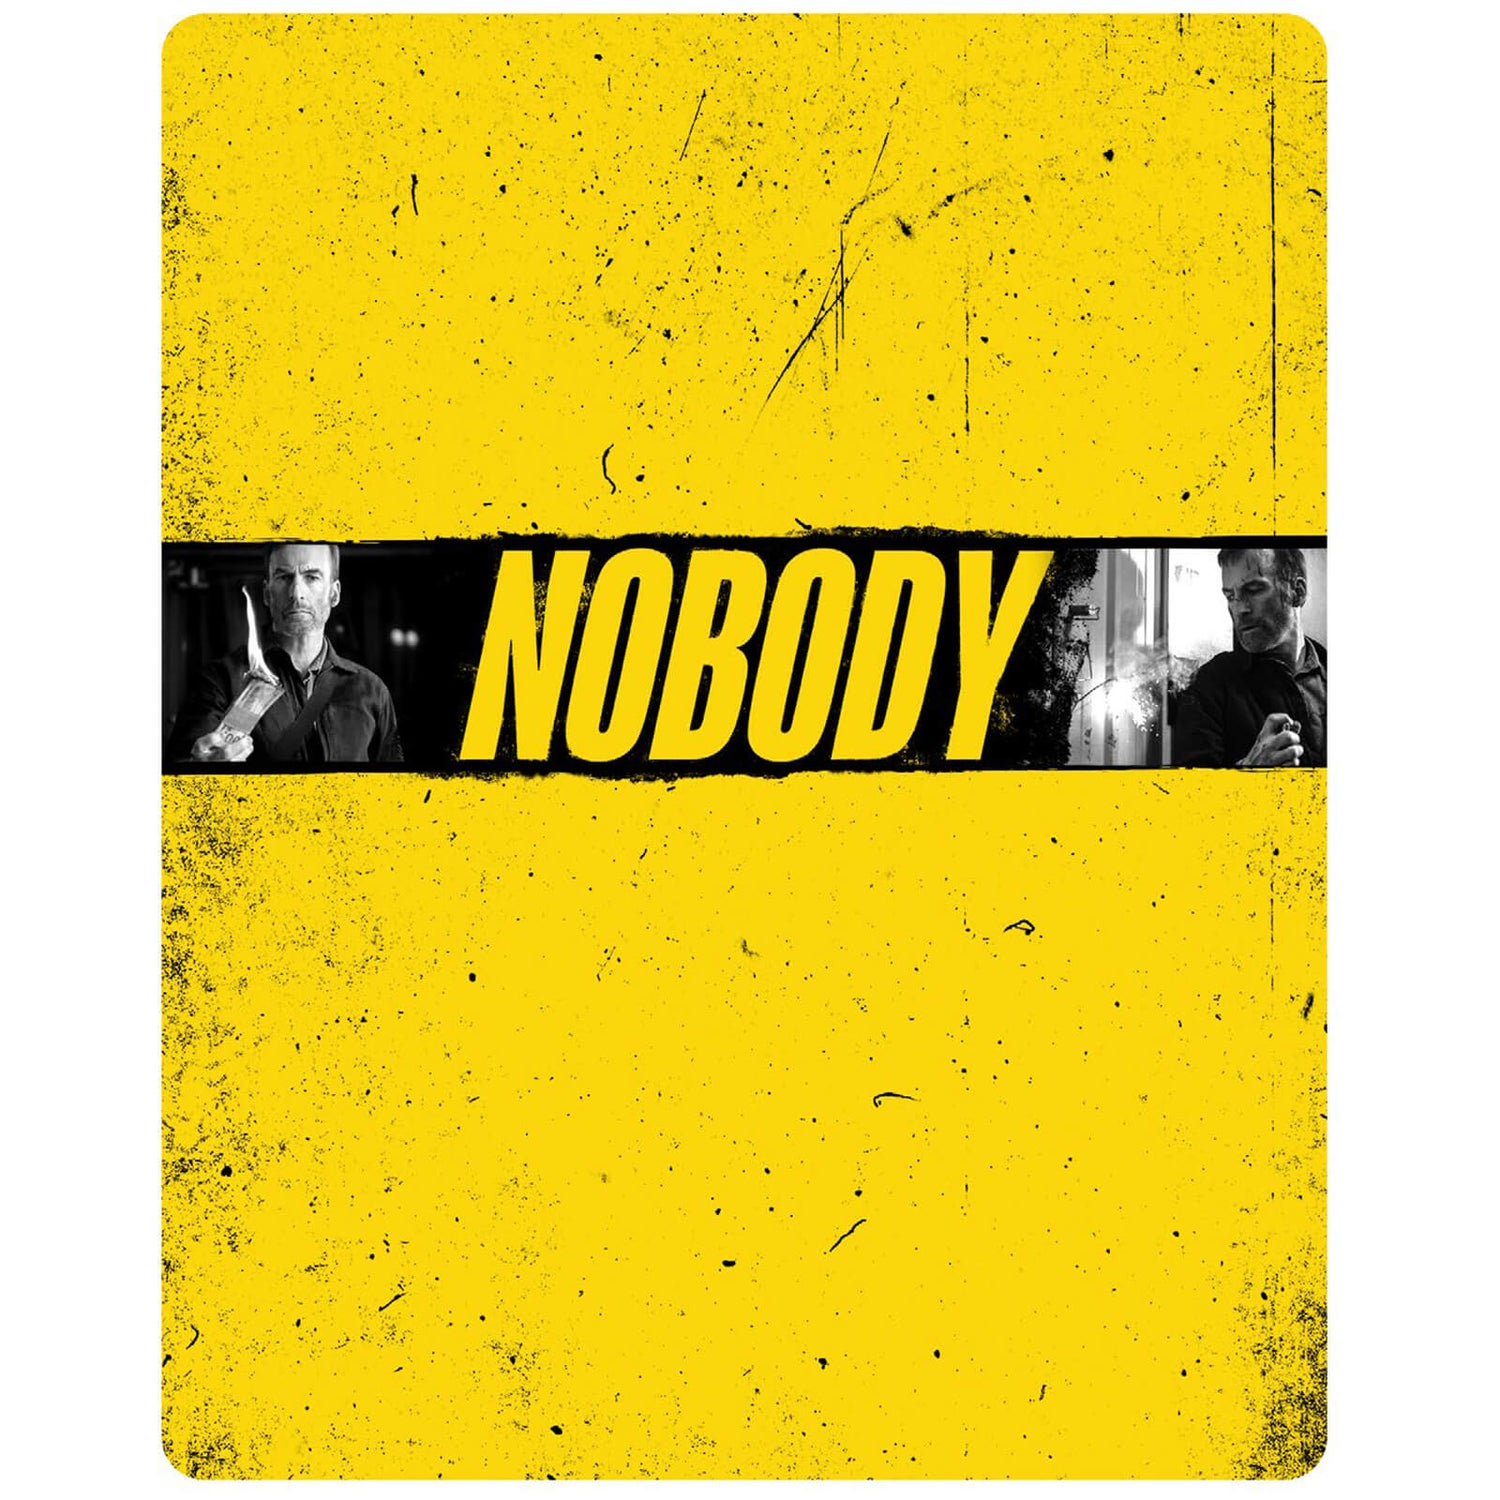 Nobody - 4K Ultra HD Steelbook (Includes Blu-ray)